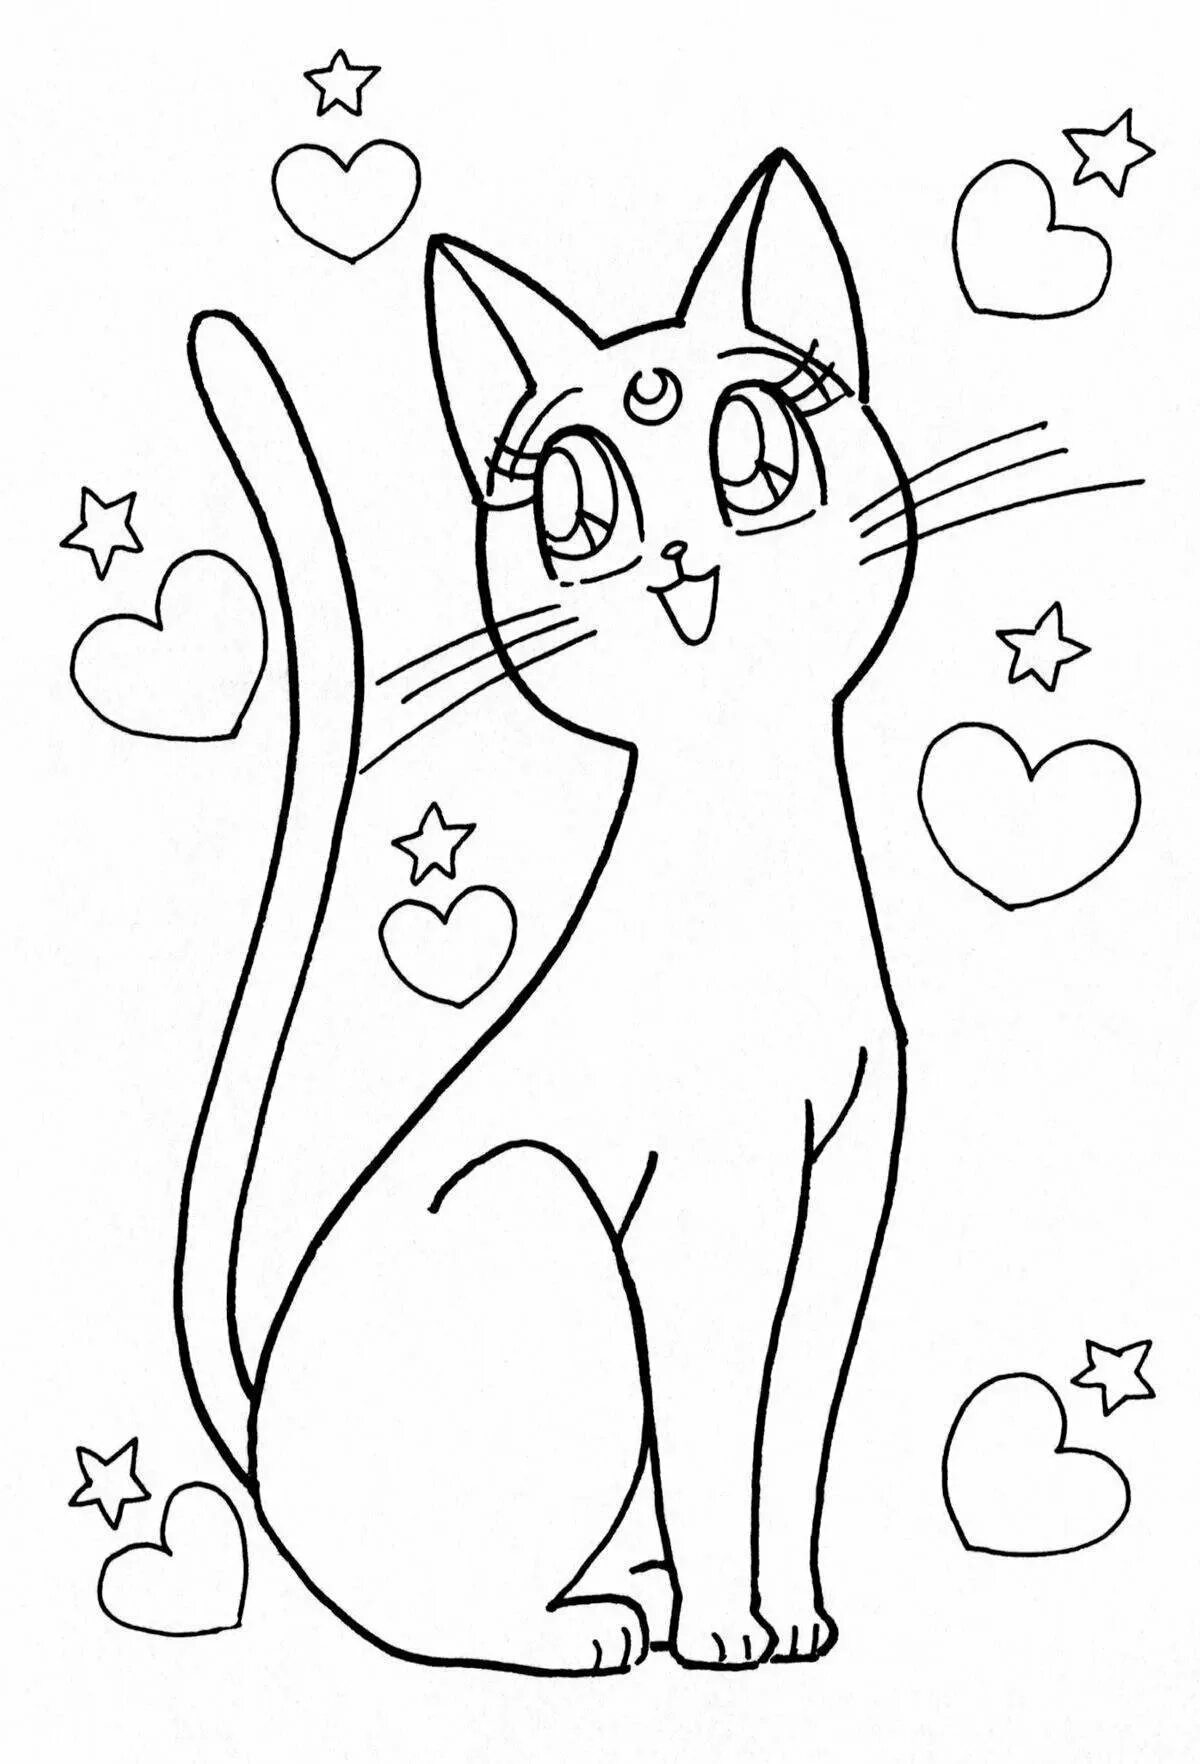 Рисунки для срисовки на лист а4. Кошки. Раскраска. Раскраска кот. Кошка рисунок раскраска. Раскраска для девочек кошки.